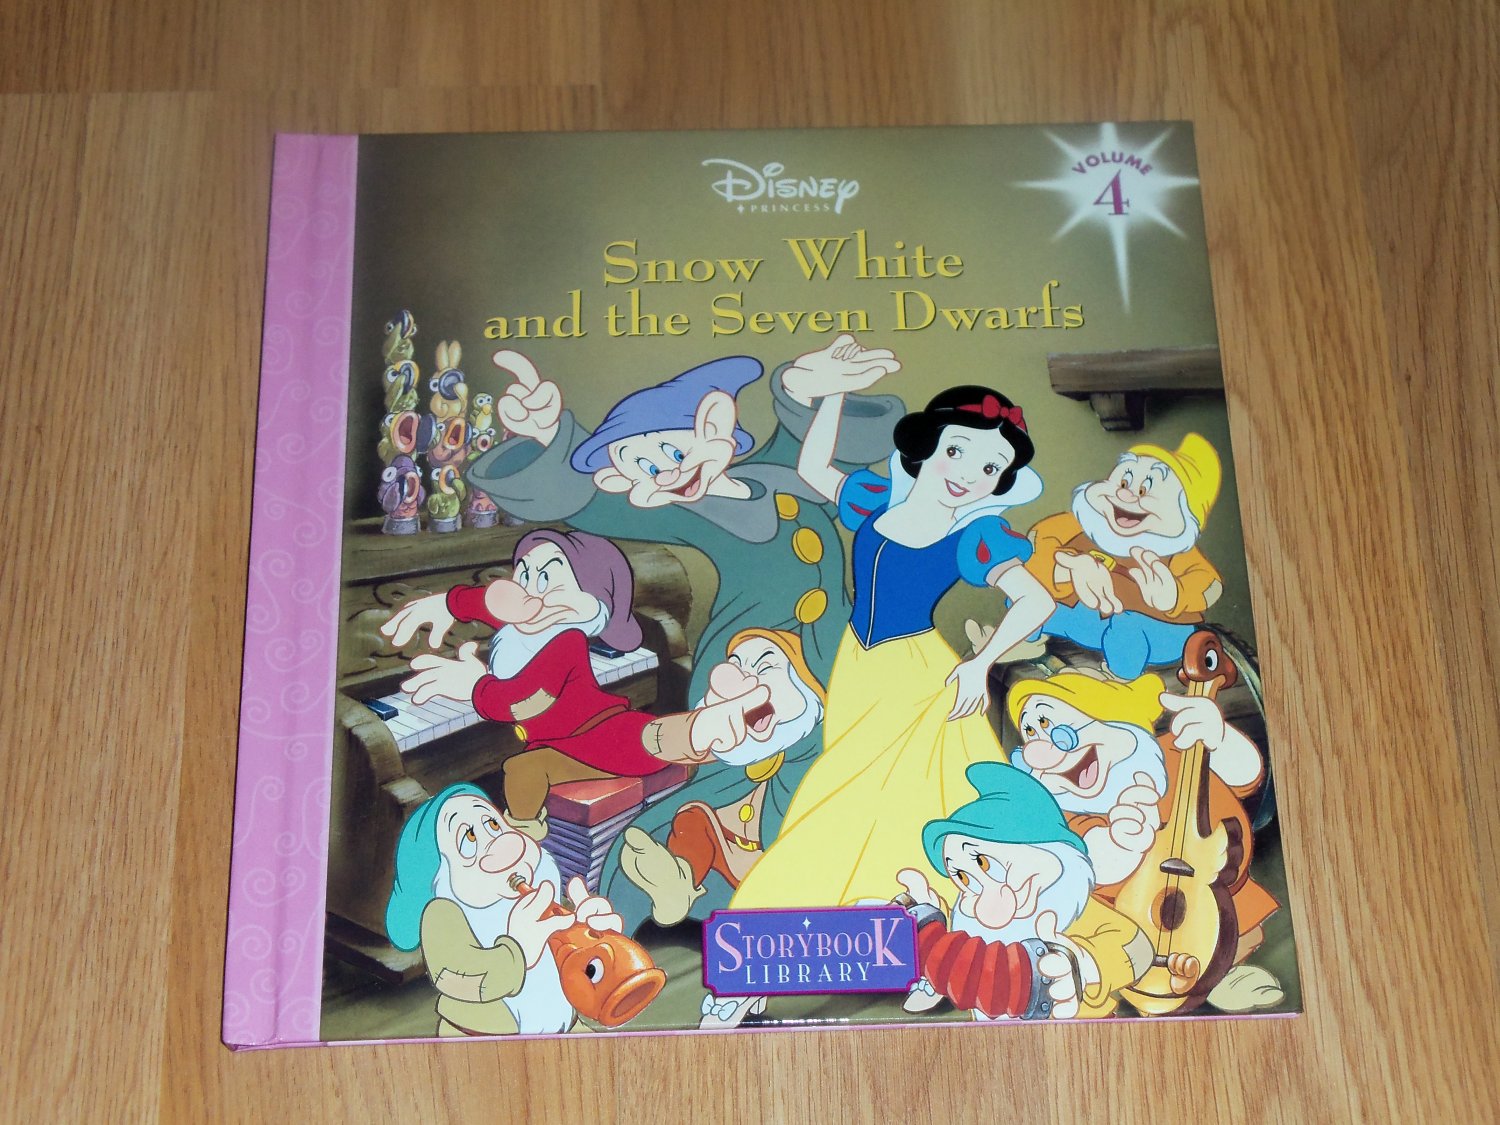 Disney Princess Snow White And The Seven Dwarfs Storybook Library Volume 4 